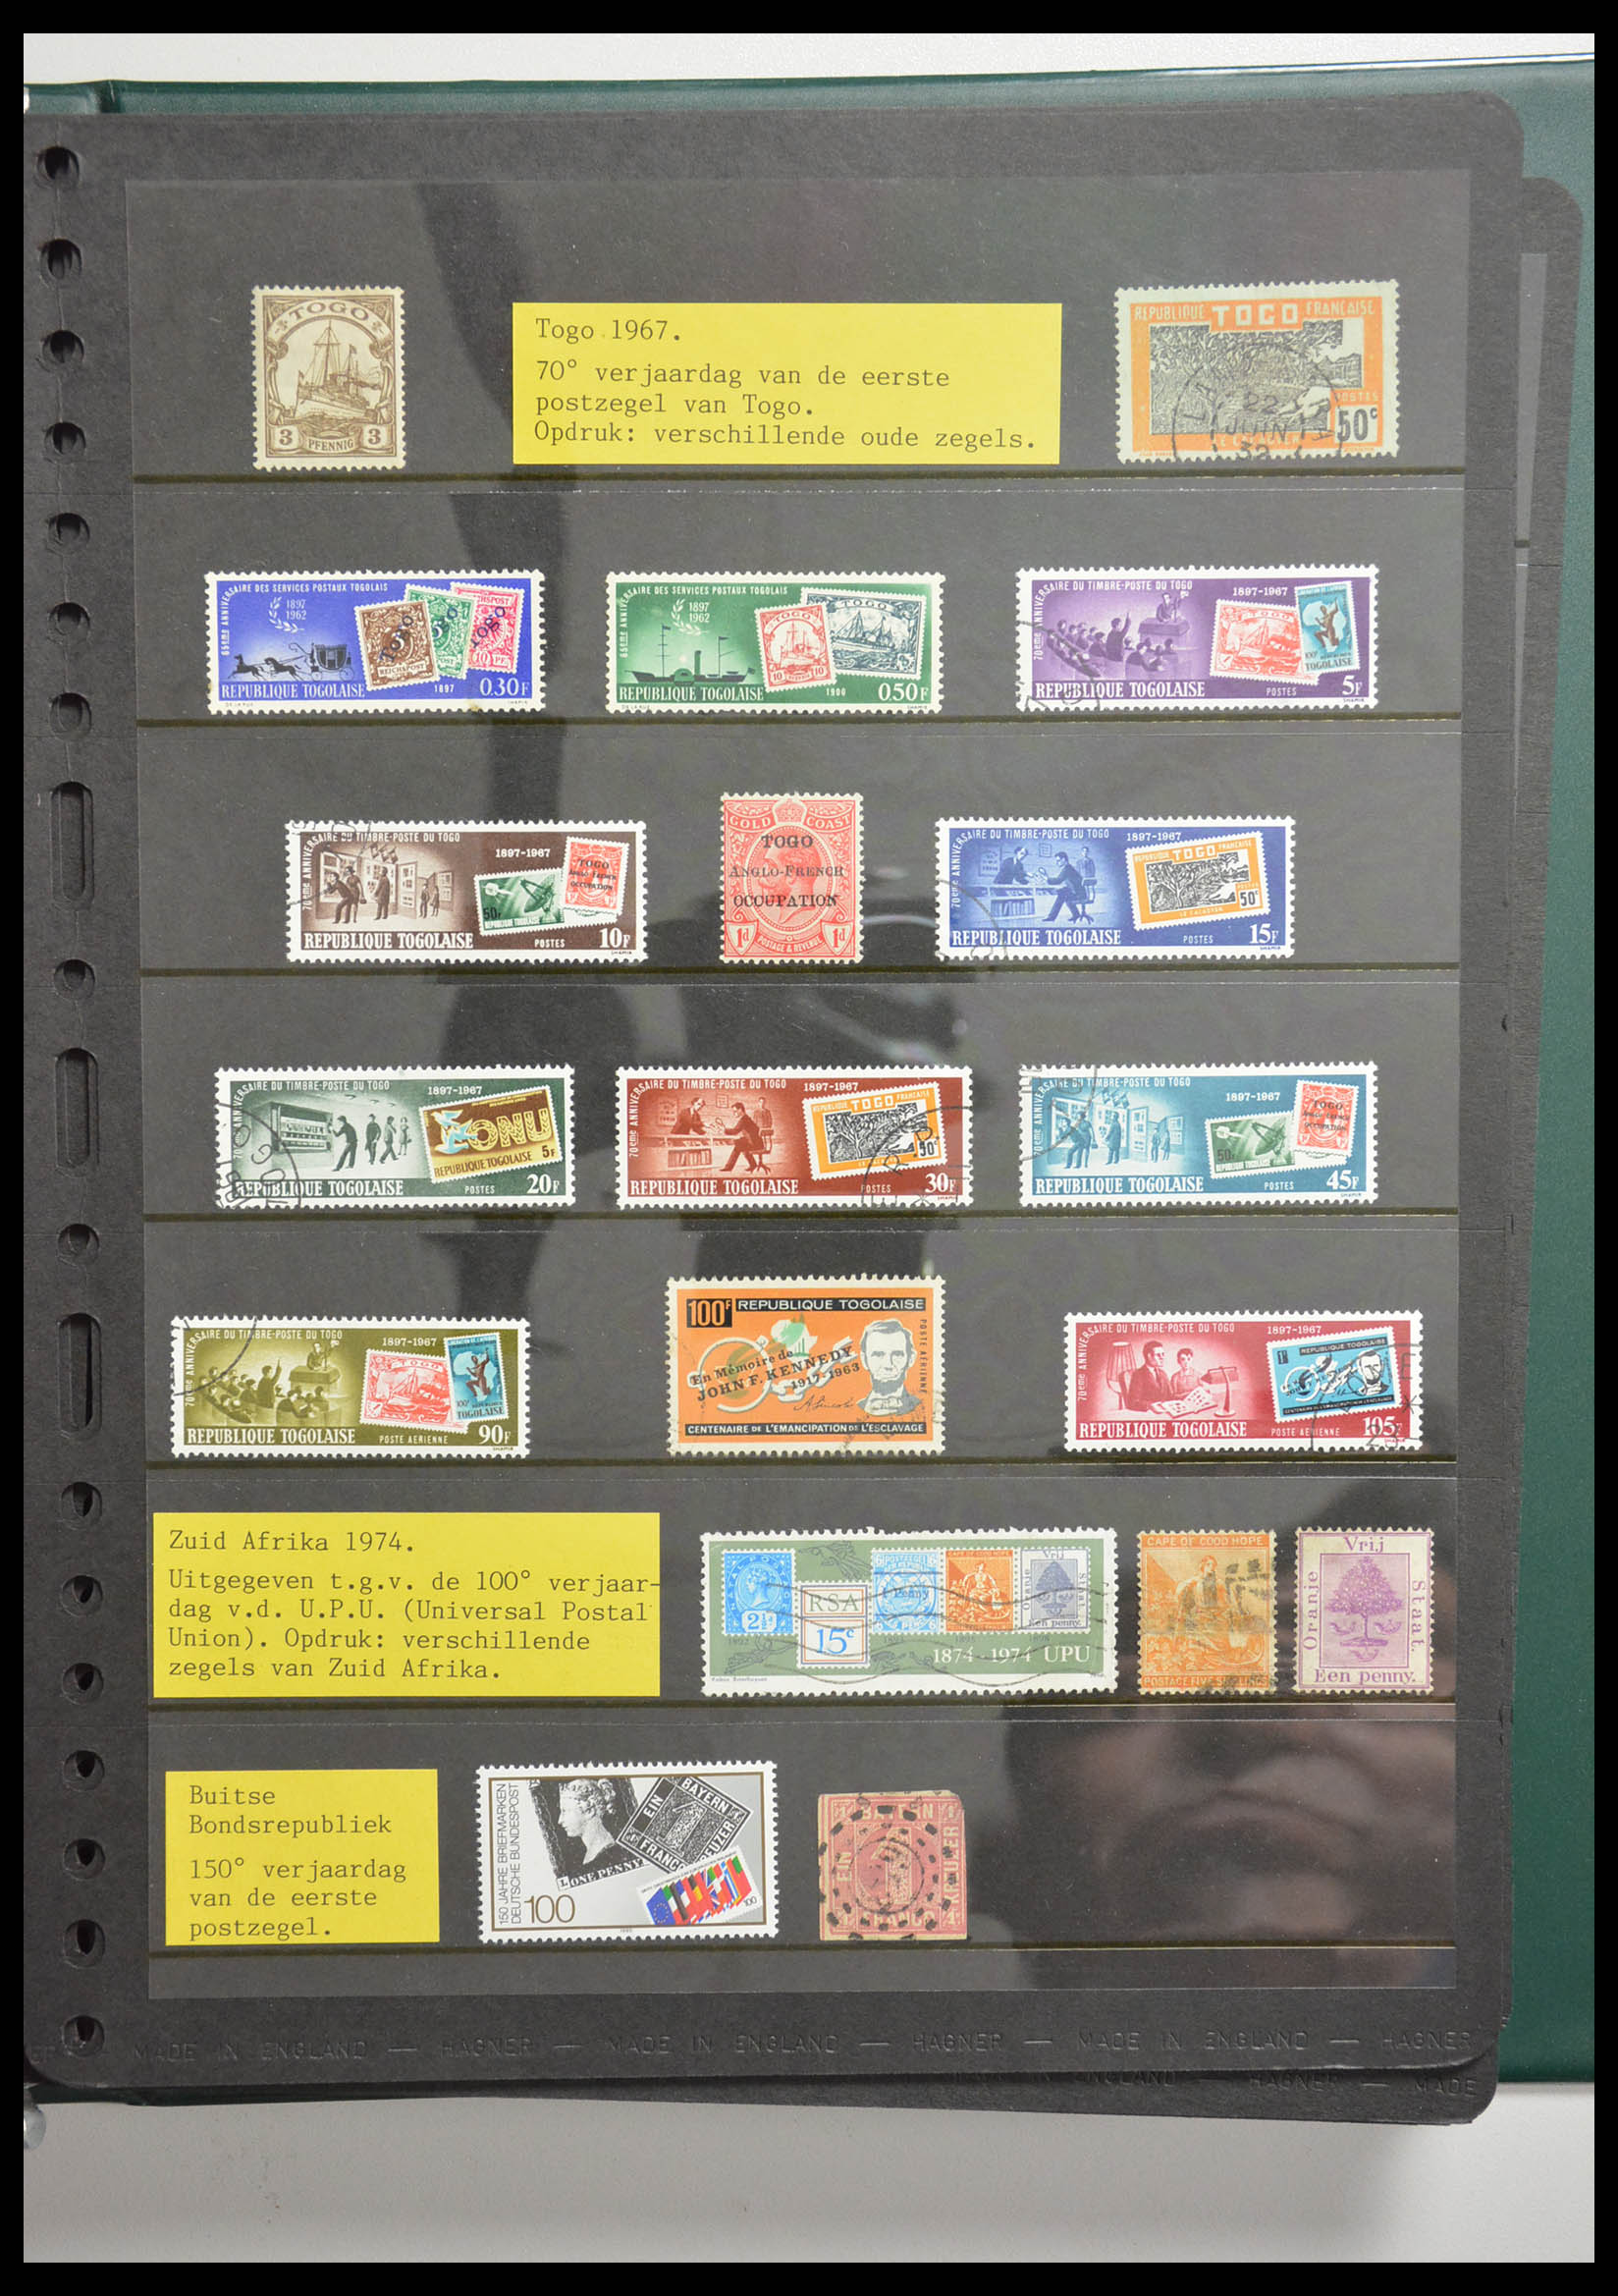 28337 003 - 28337 Postzegel op postzegel 1840-2001.